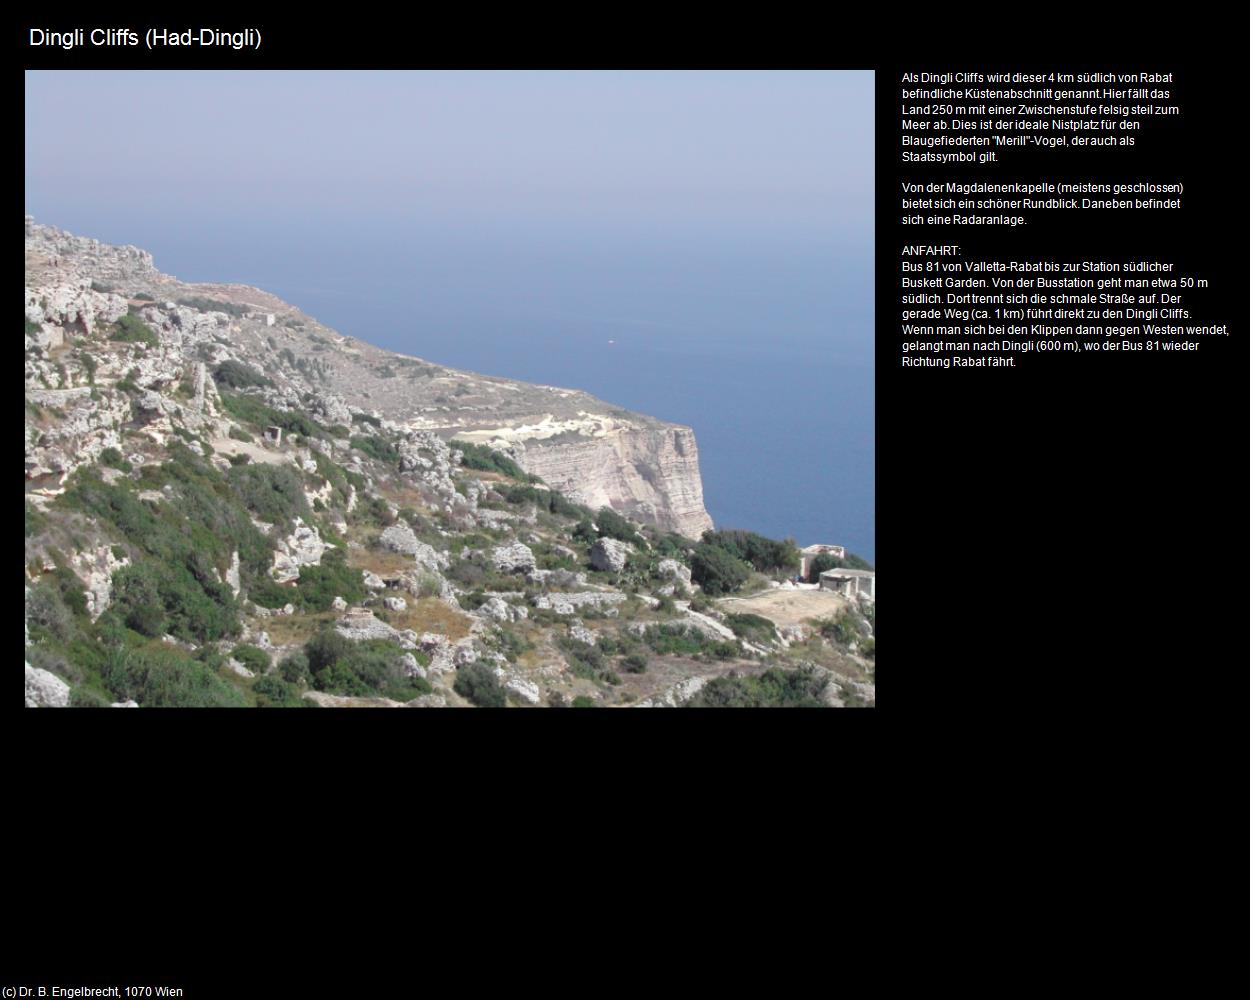 Dingli Cliffs (Had-Dingli auf Malta) in Malta - Perle im Mittelmeer